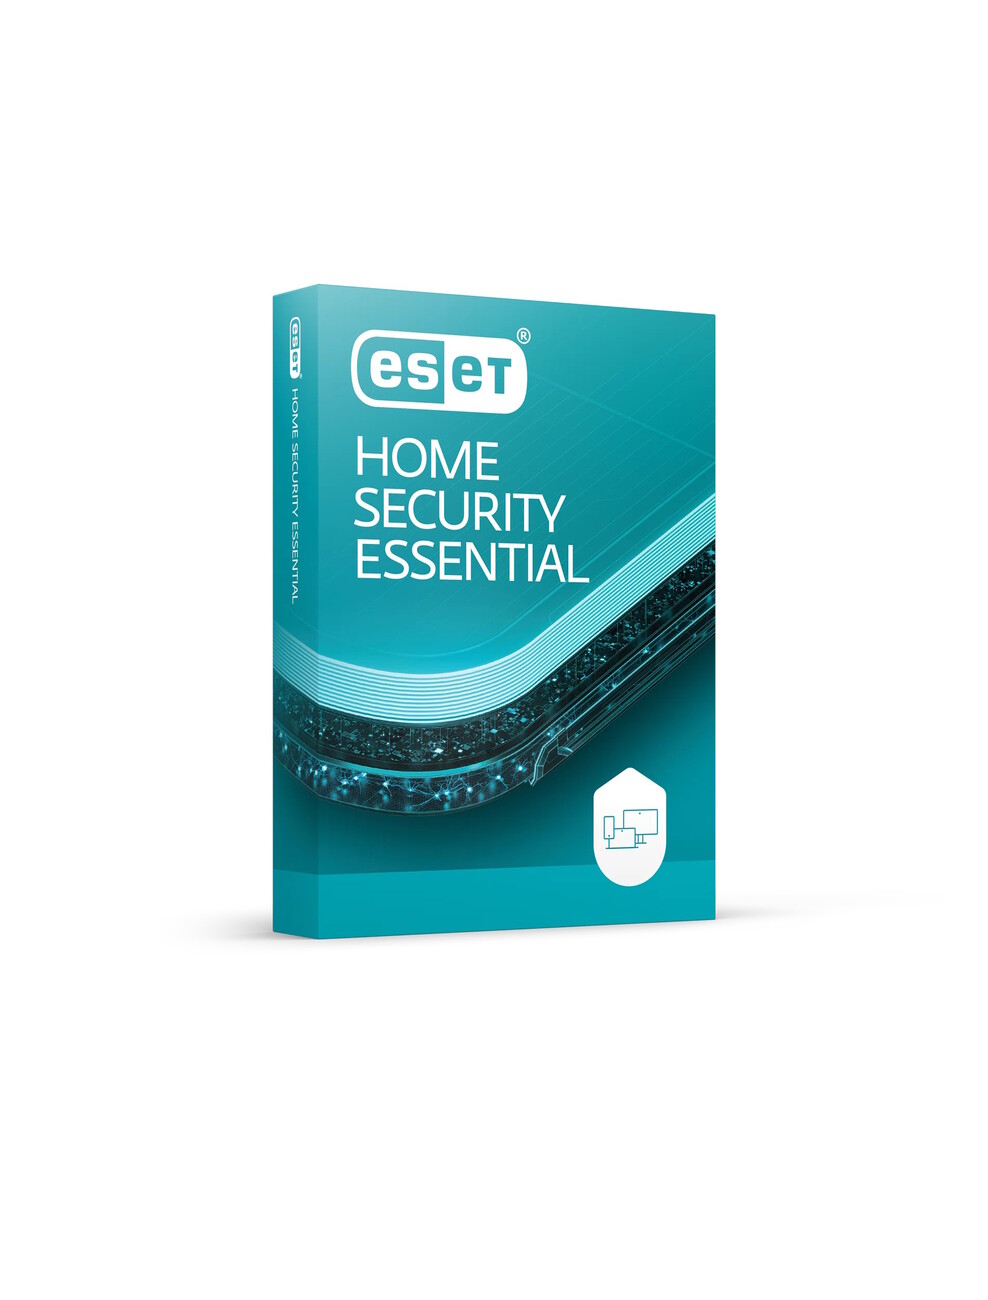 ESET HOME SECURITY ESSENTIAL EX INTERNET SECURITY